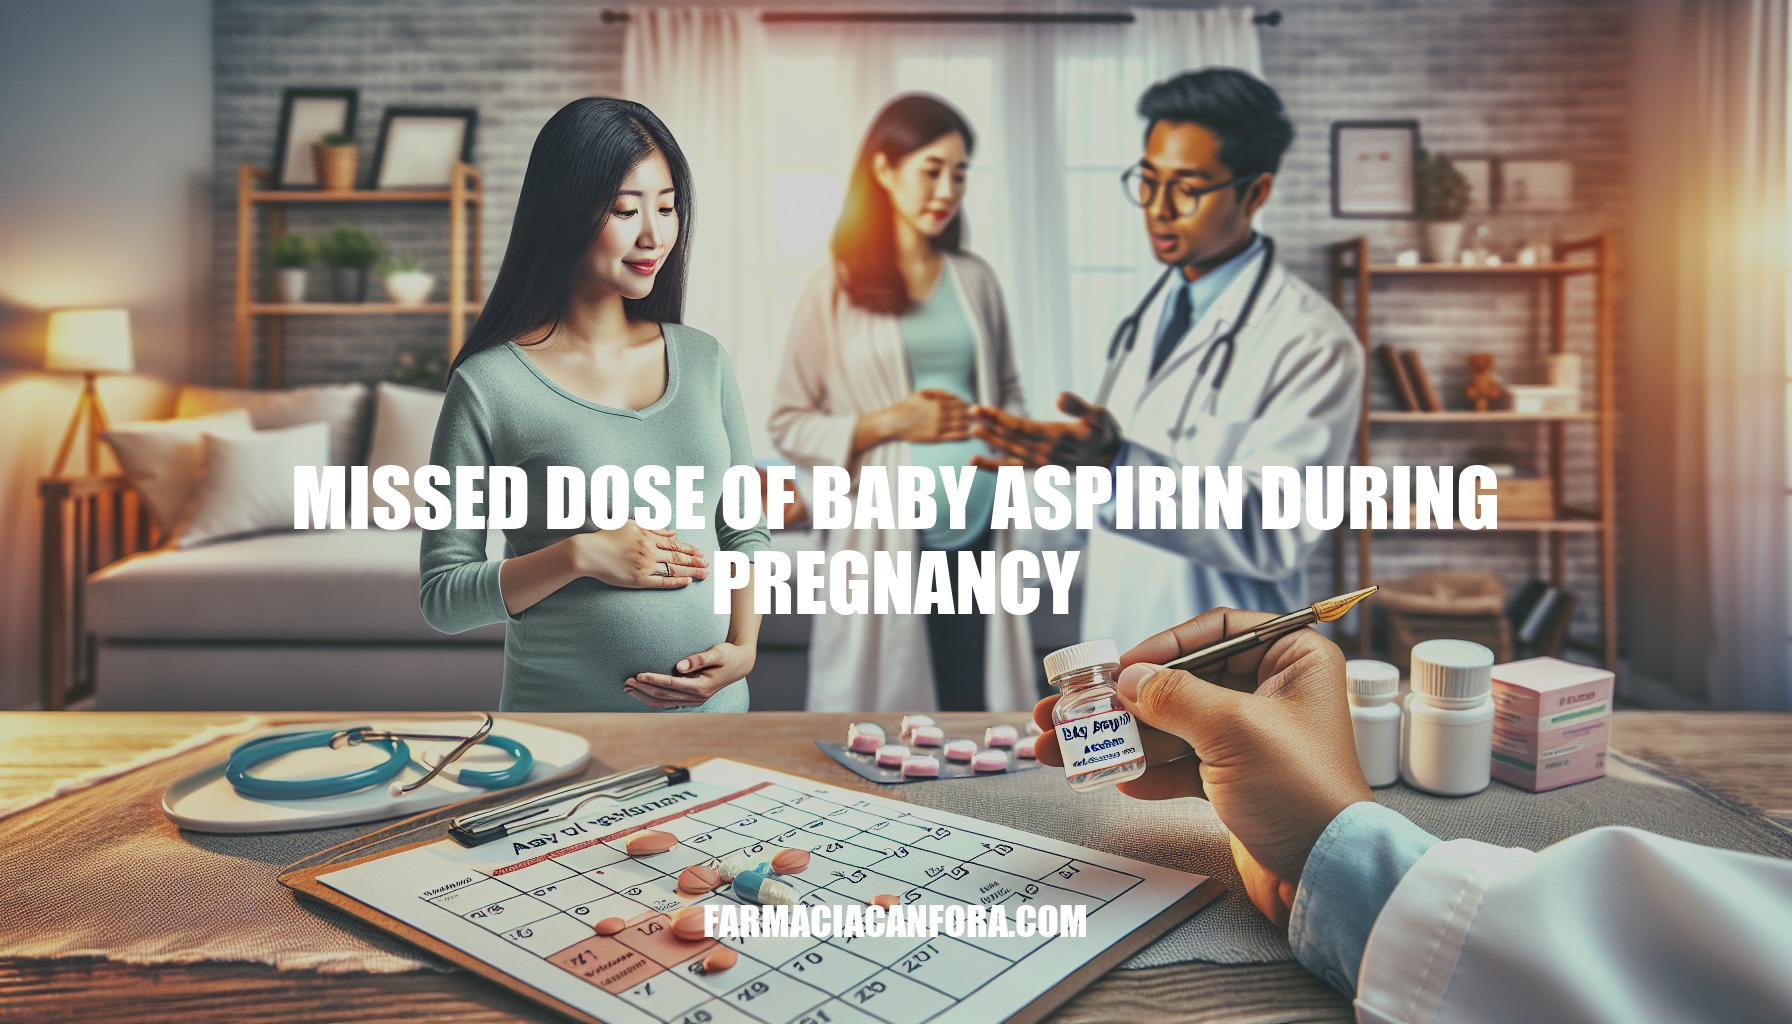 Managing Missed Dose of Baby Aspirin During Pregnancy